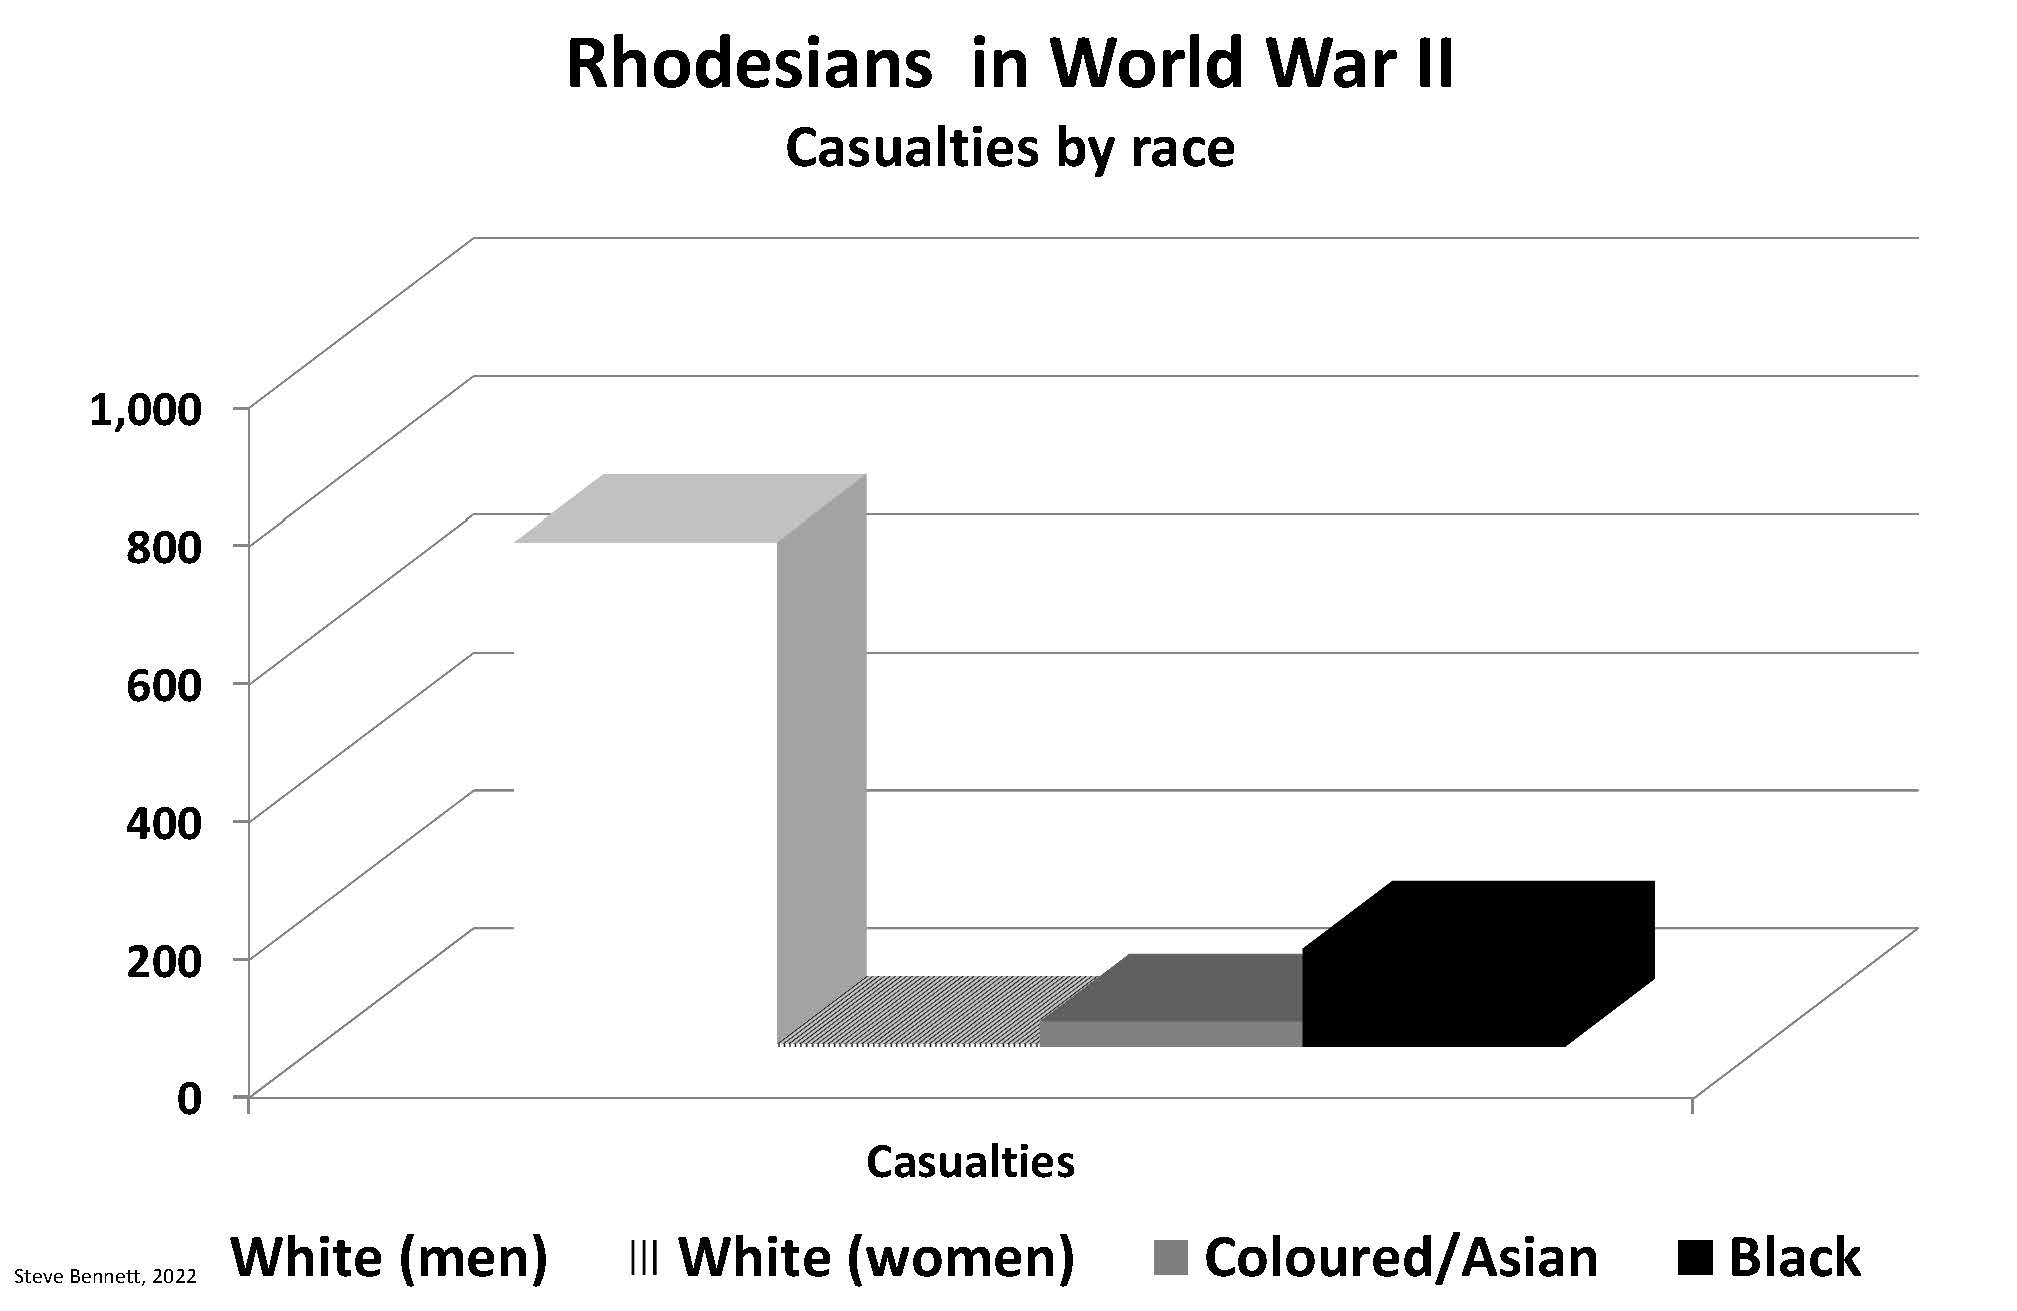 Chart showing casualties of Rhodesians by race in World War II